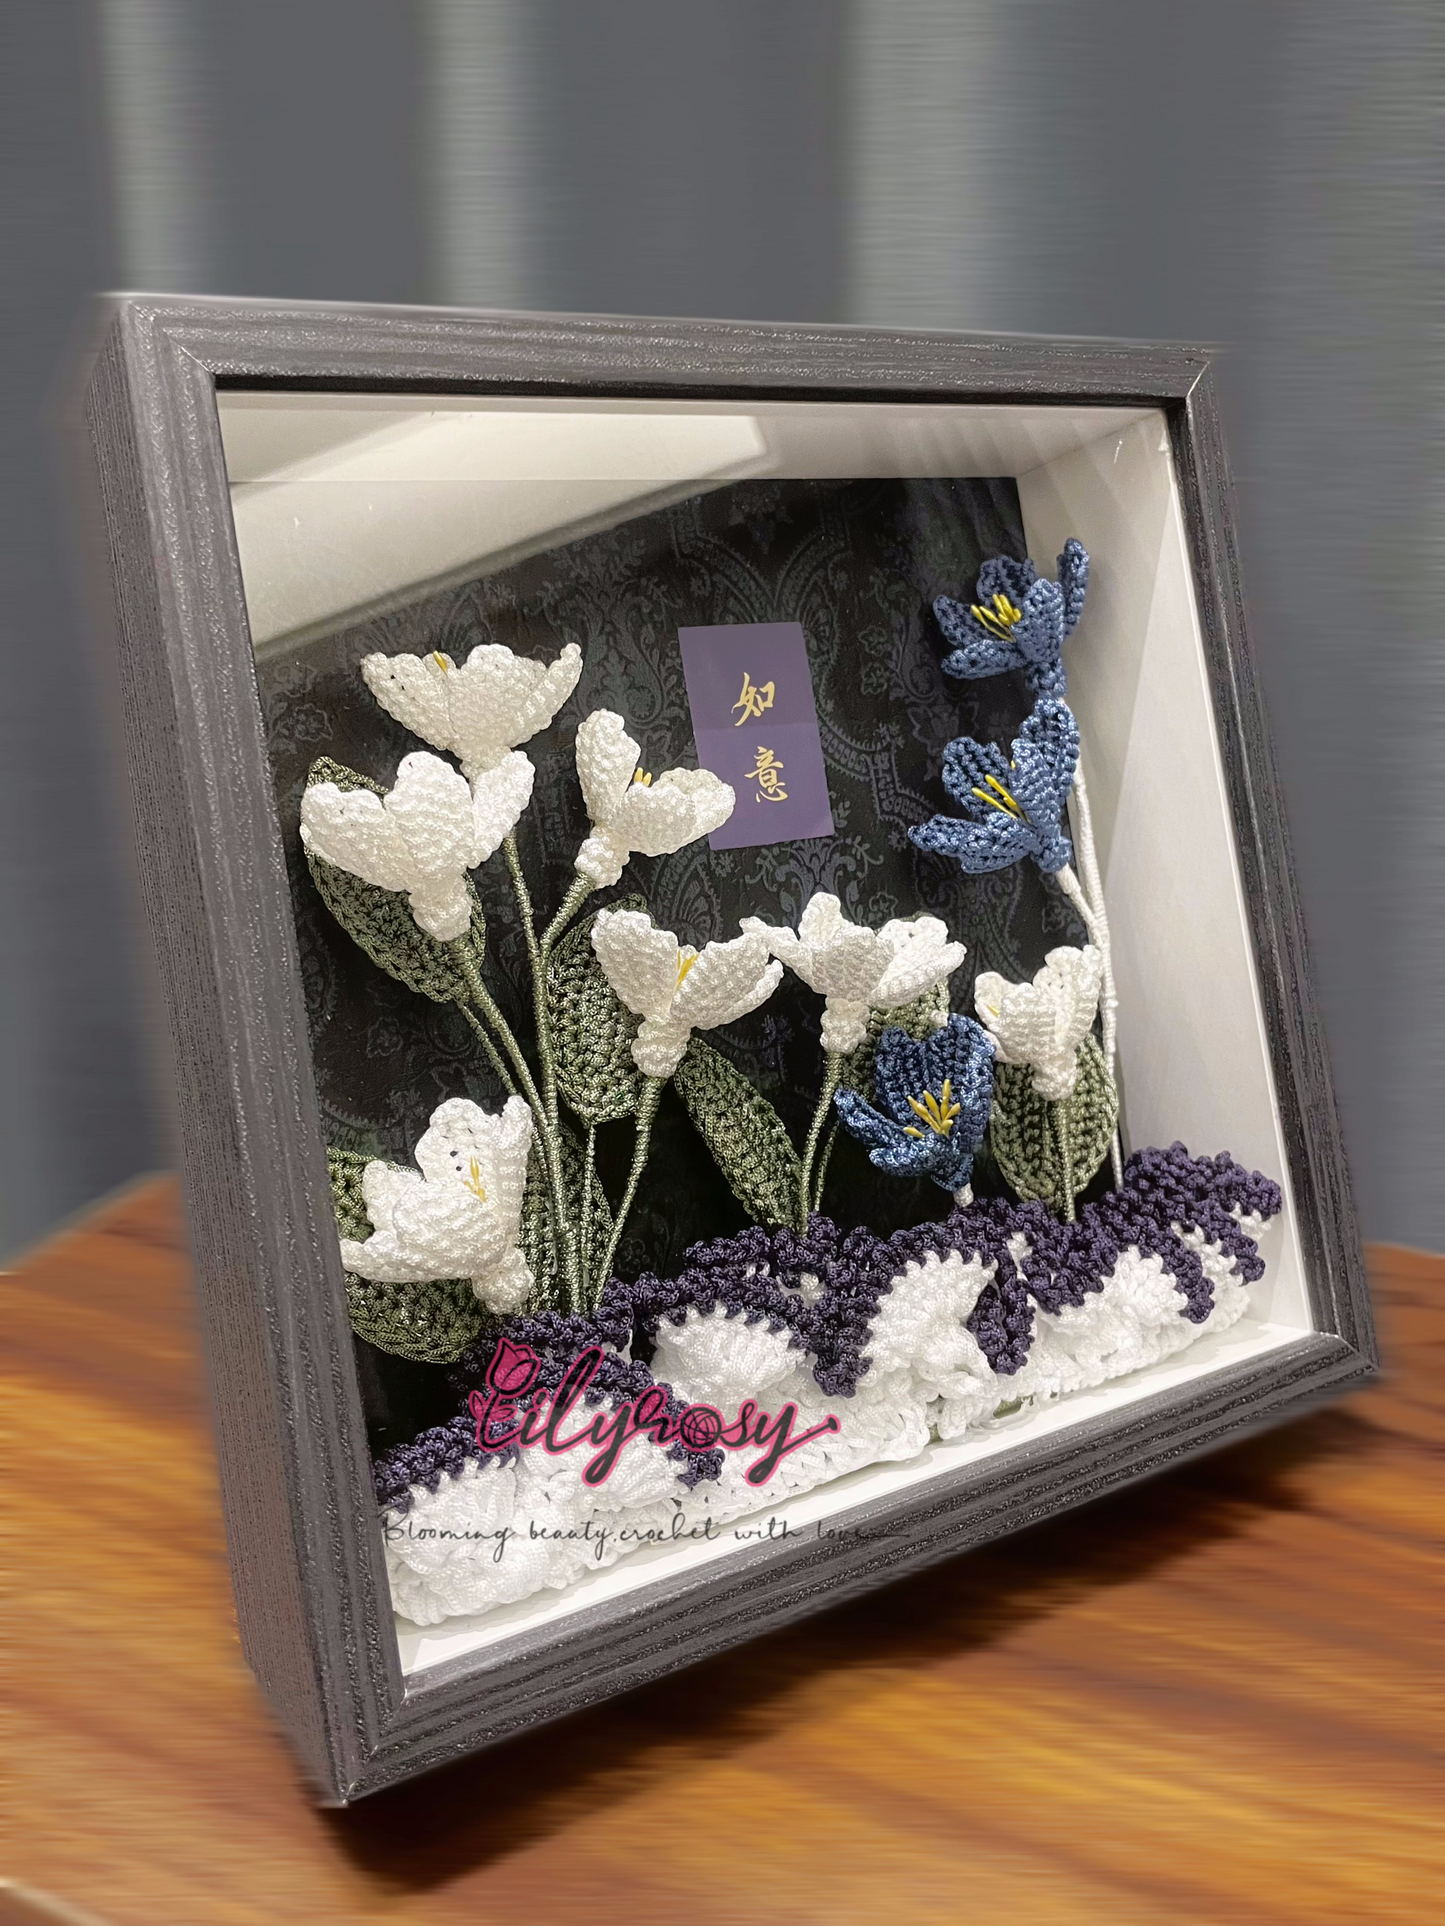 Handmade|Crochet wild flowers  photo frame ,table  Decor, Office decor,home decor